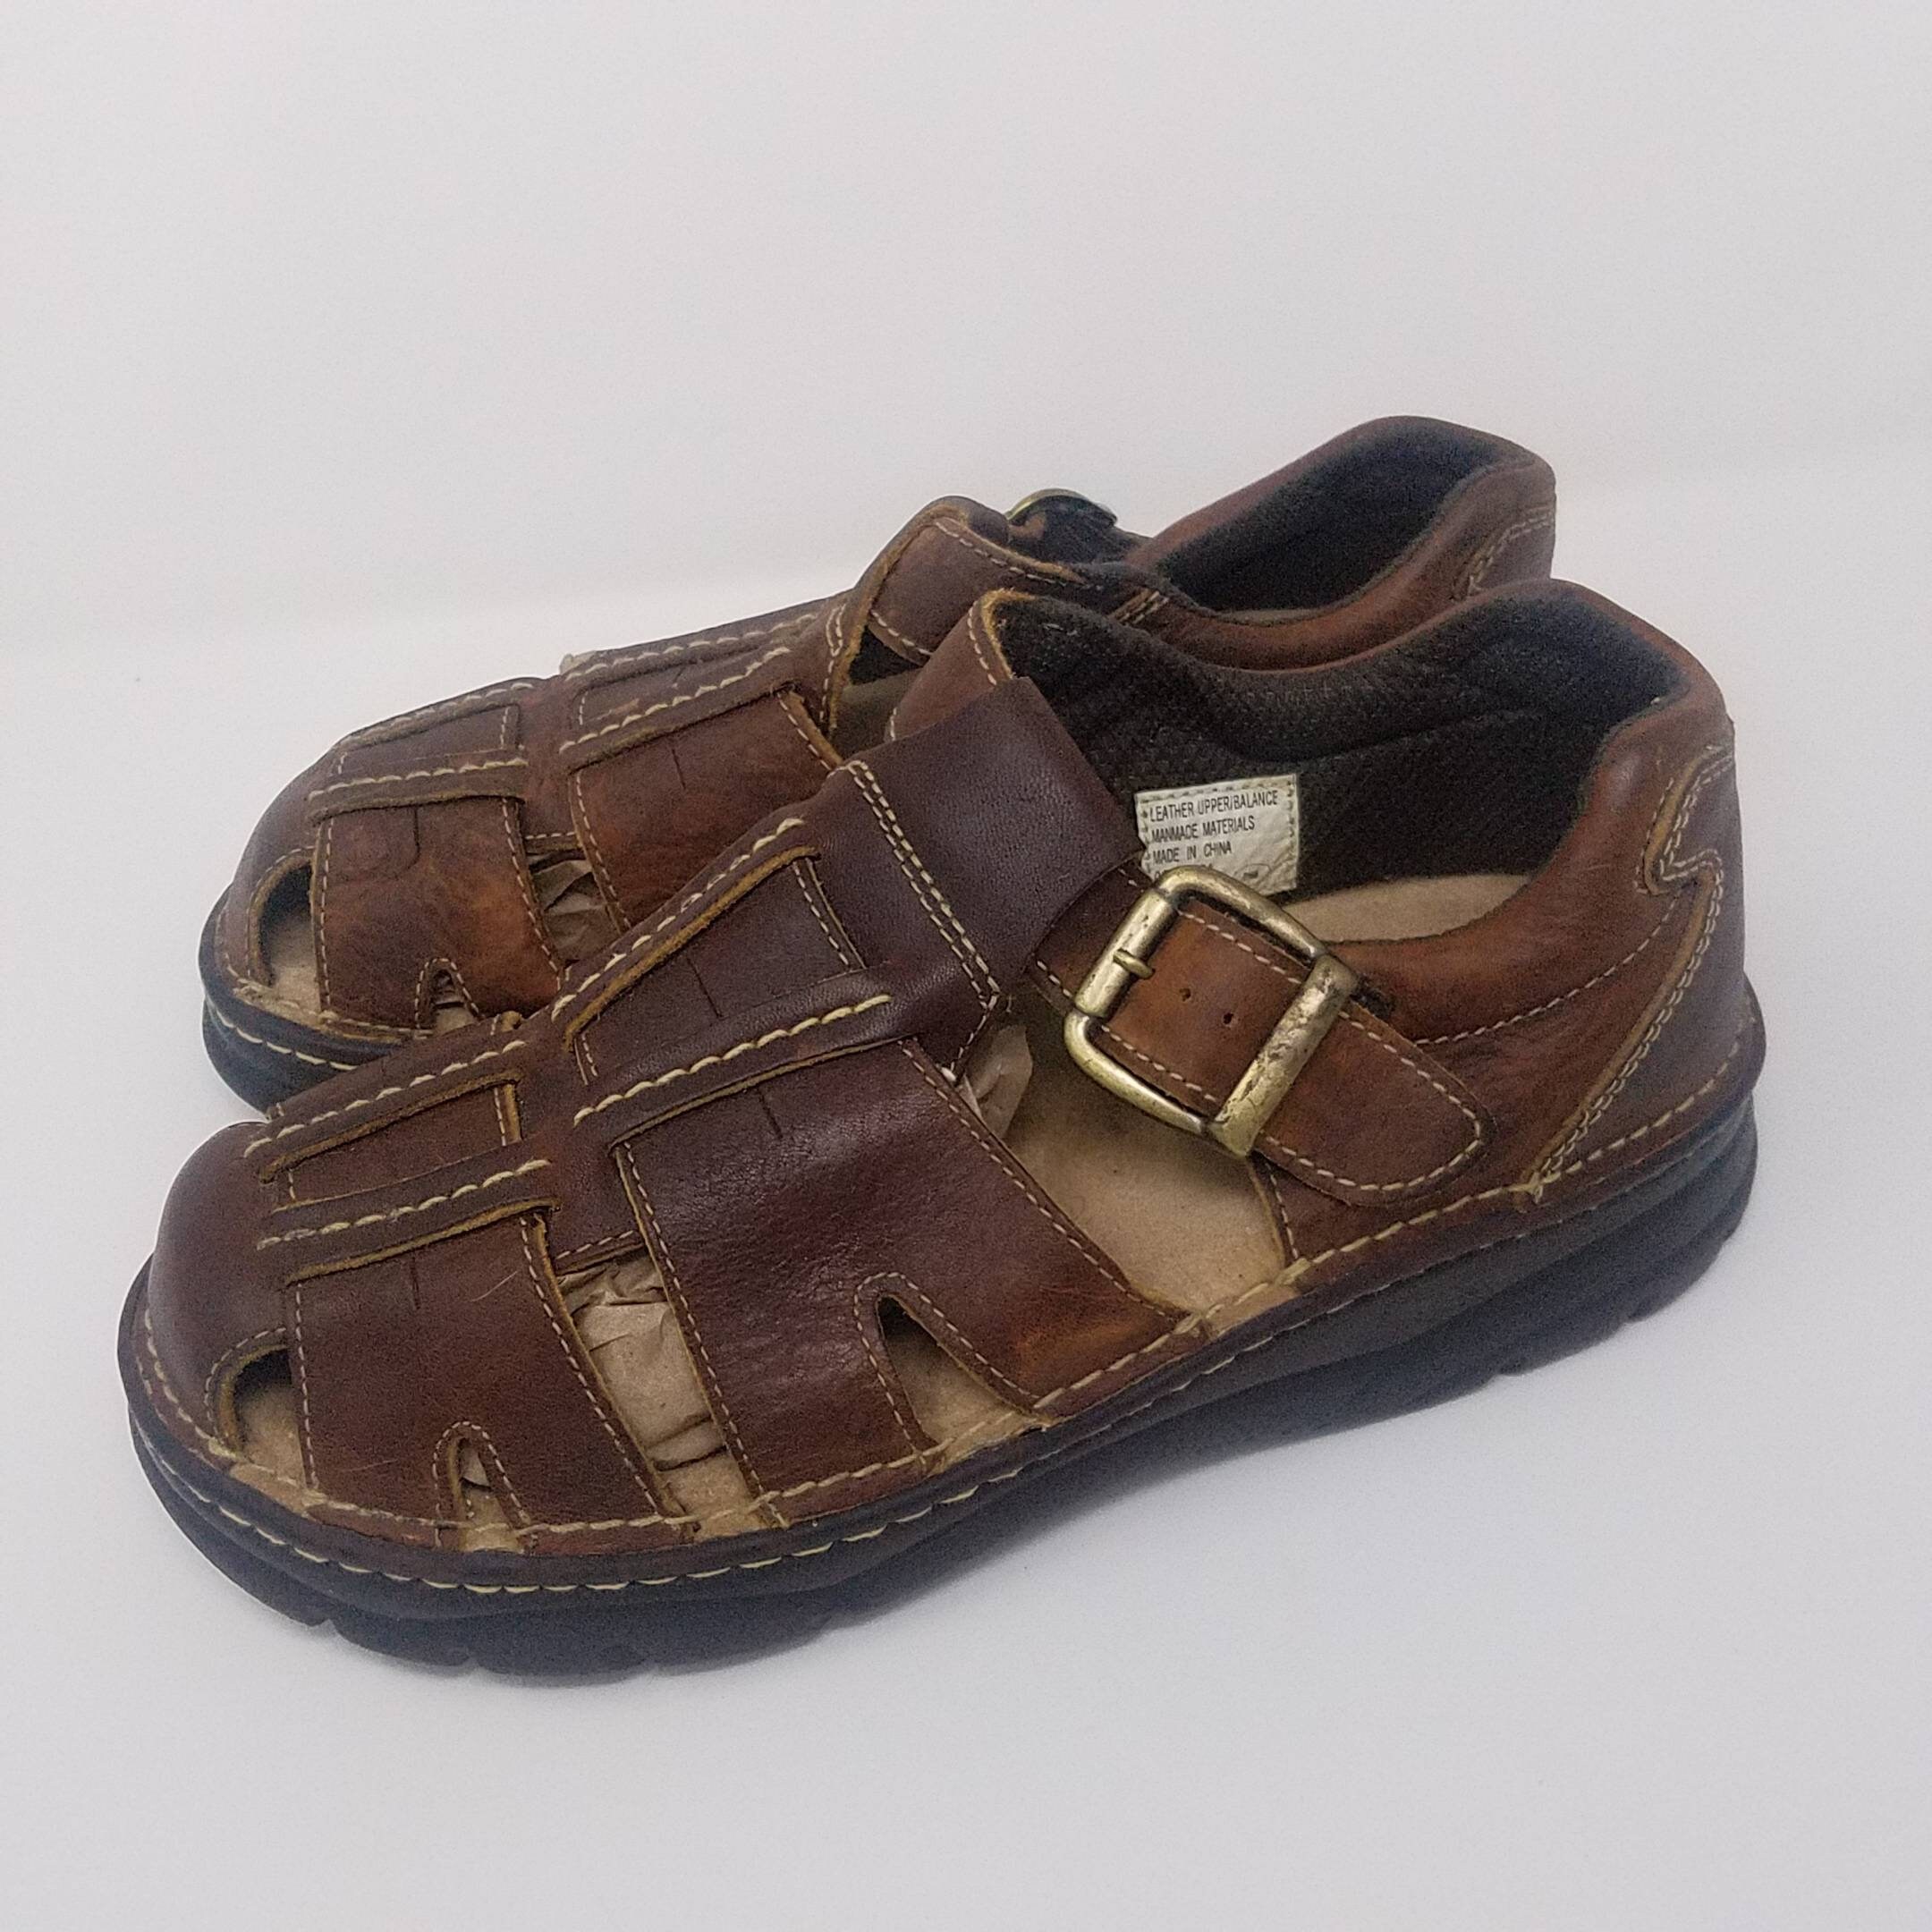 Vintage Brown Leather 90s Fisherman Sandals Buckle Comfort - Etsy